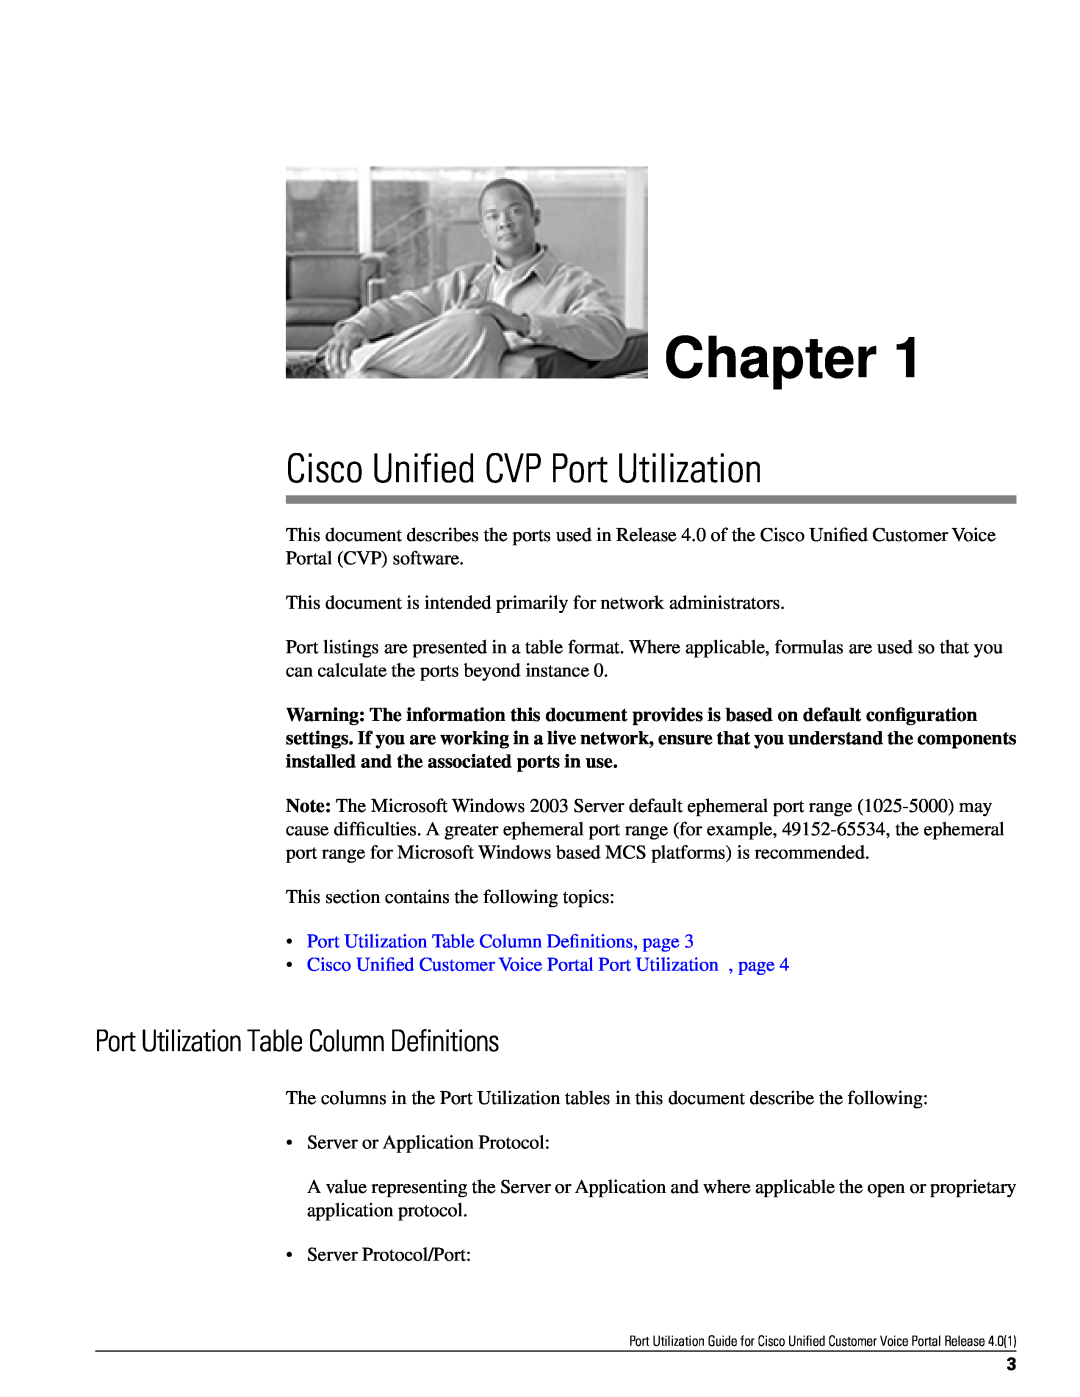 Cisco Systems 4.0(1) manual Port Utilization Table Column Definitions, Chapter, Cisco Unified CVP Port Utilization 